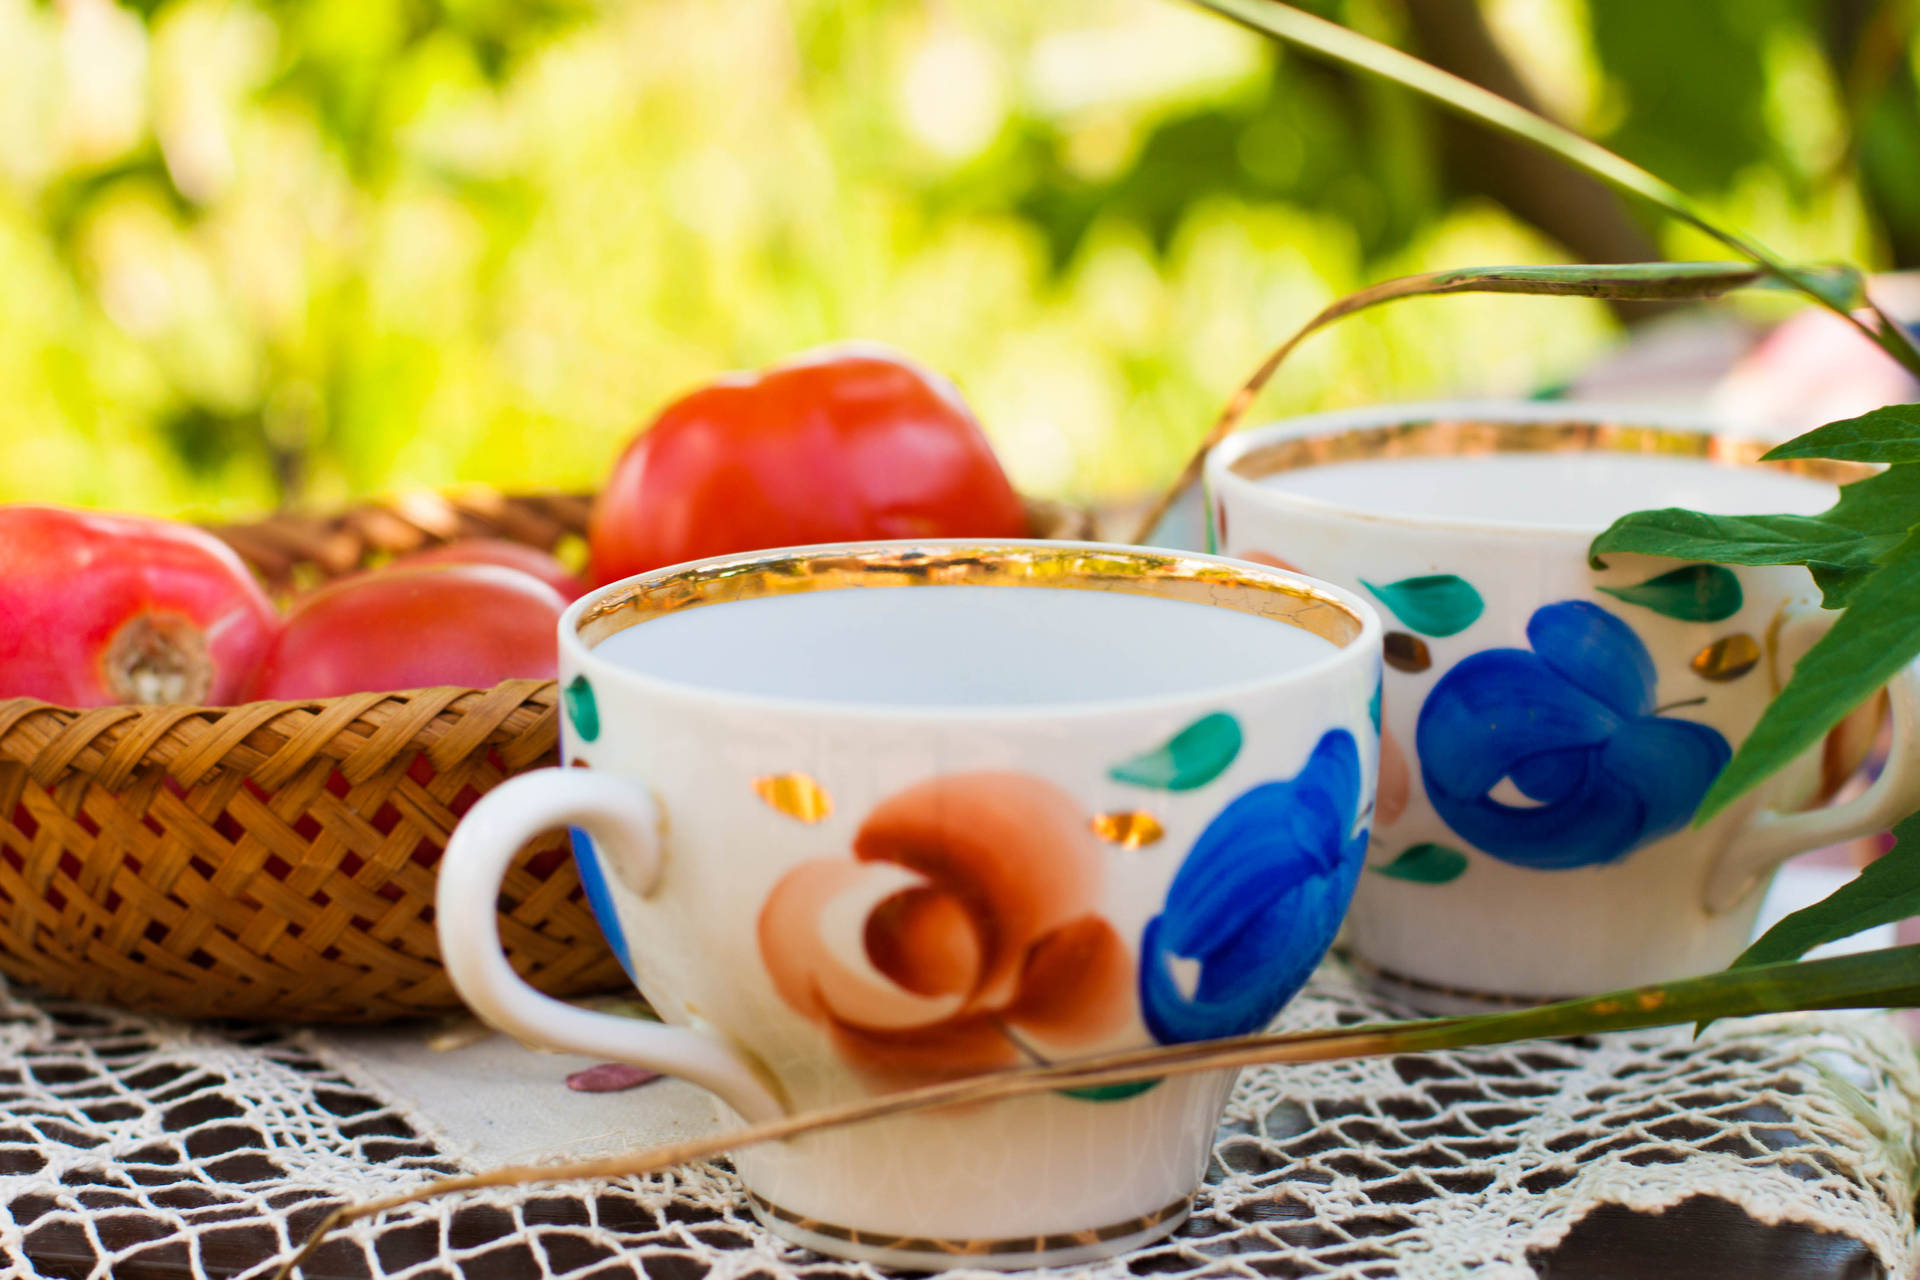 Floral Ceramic Teacups Image Wallpaper